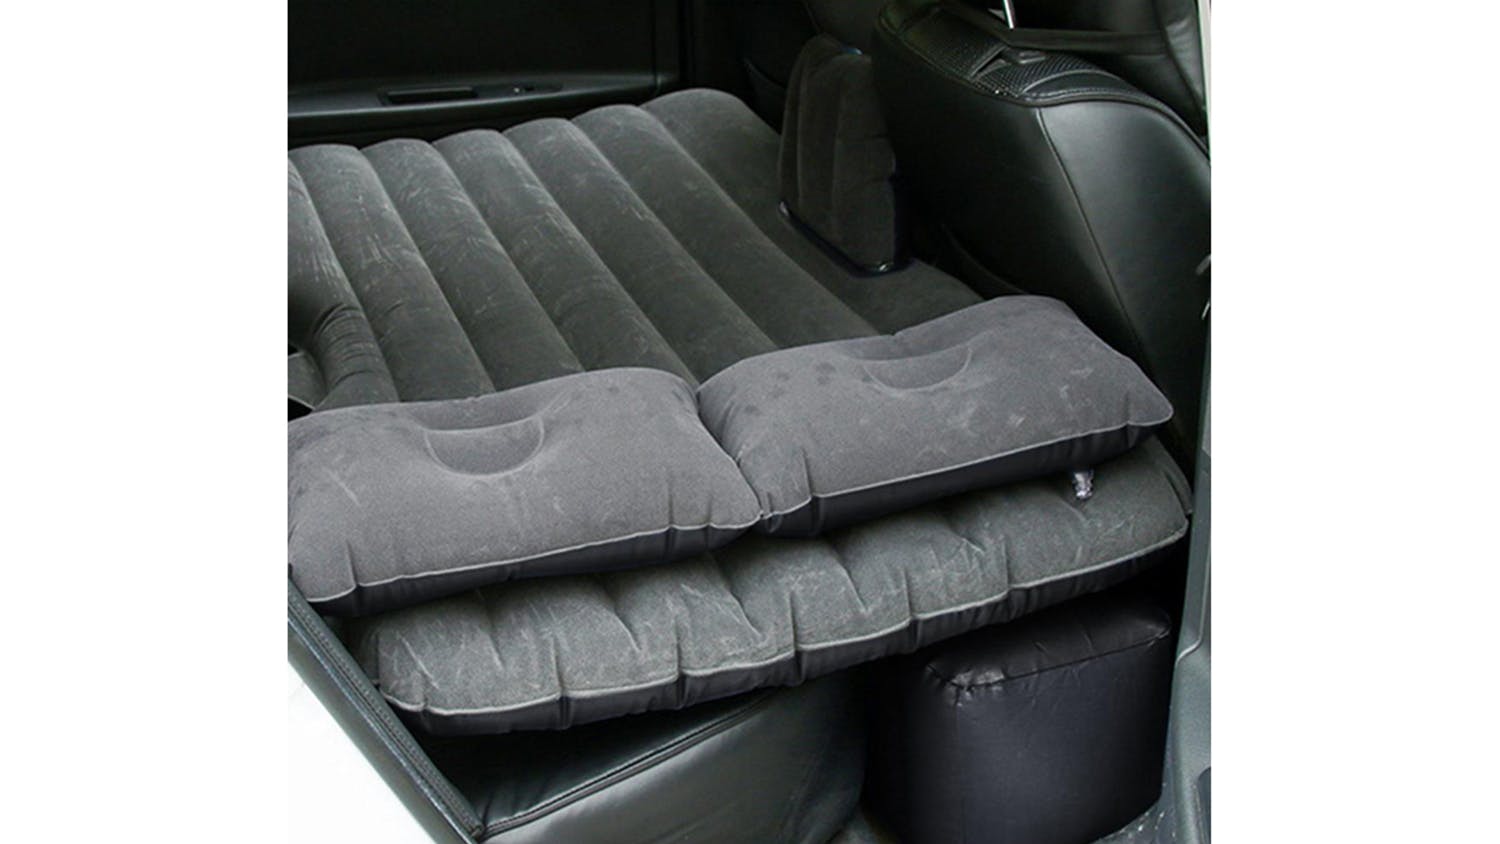 Soga Inflatable Car Mattress Air Bed - Beige